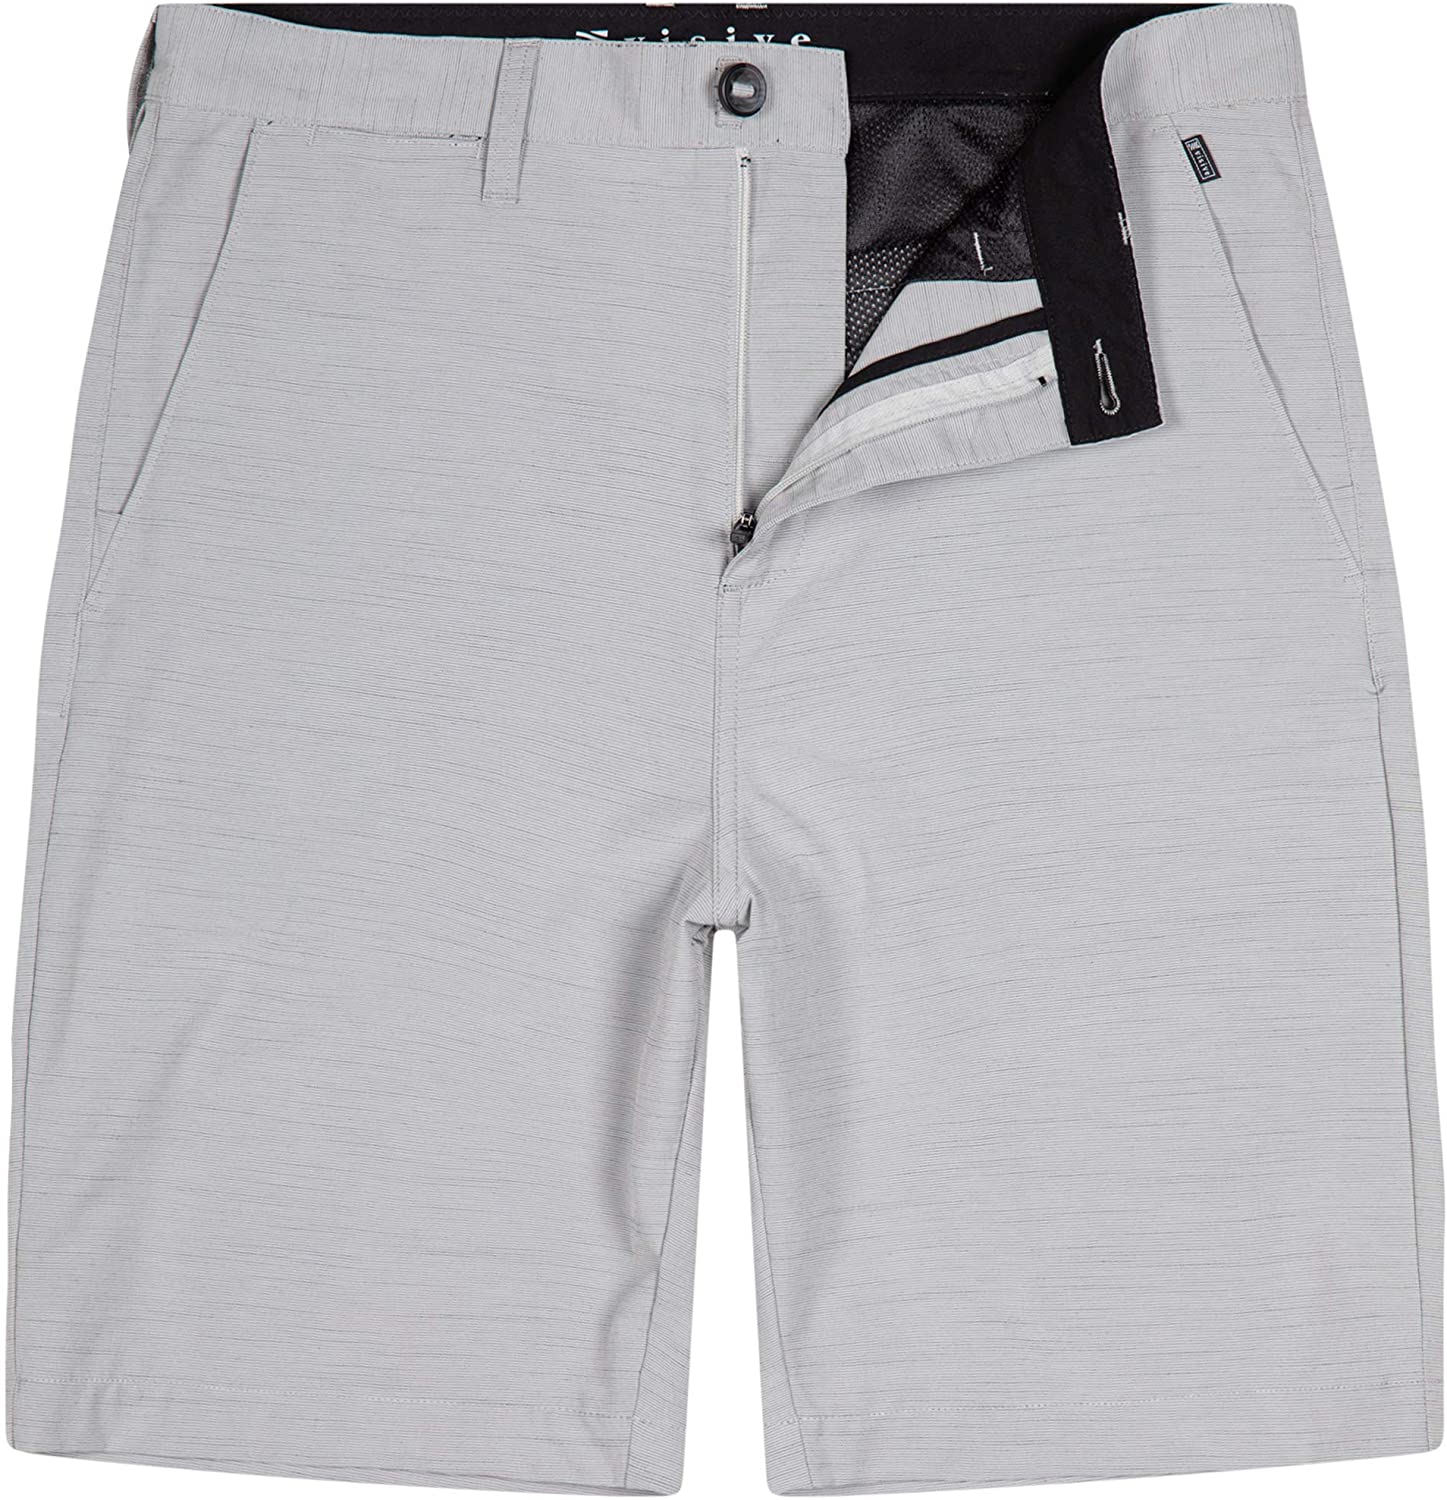 Visive Mens Premium Regular Fit Hybrid Quick Dry Board Shorts/Walk Short Size 30-44 